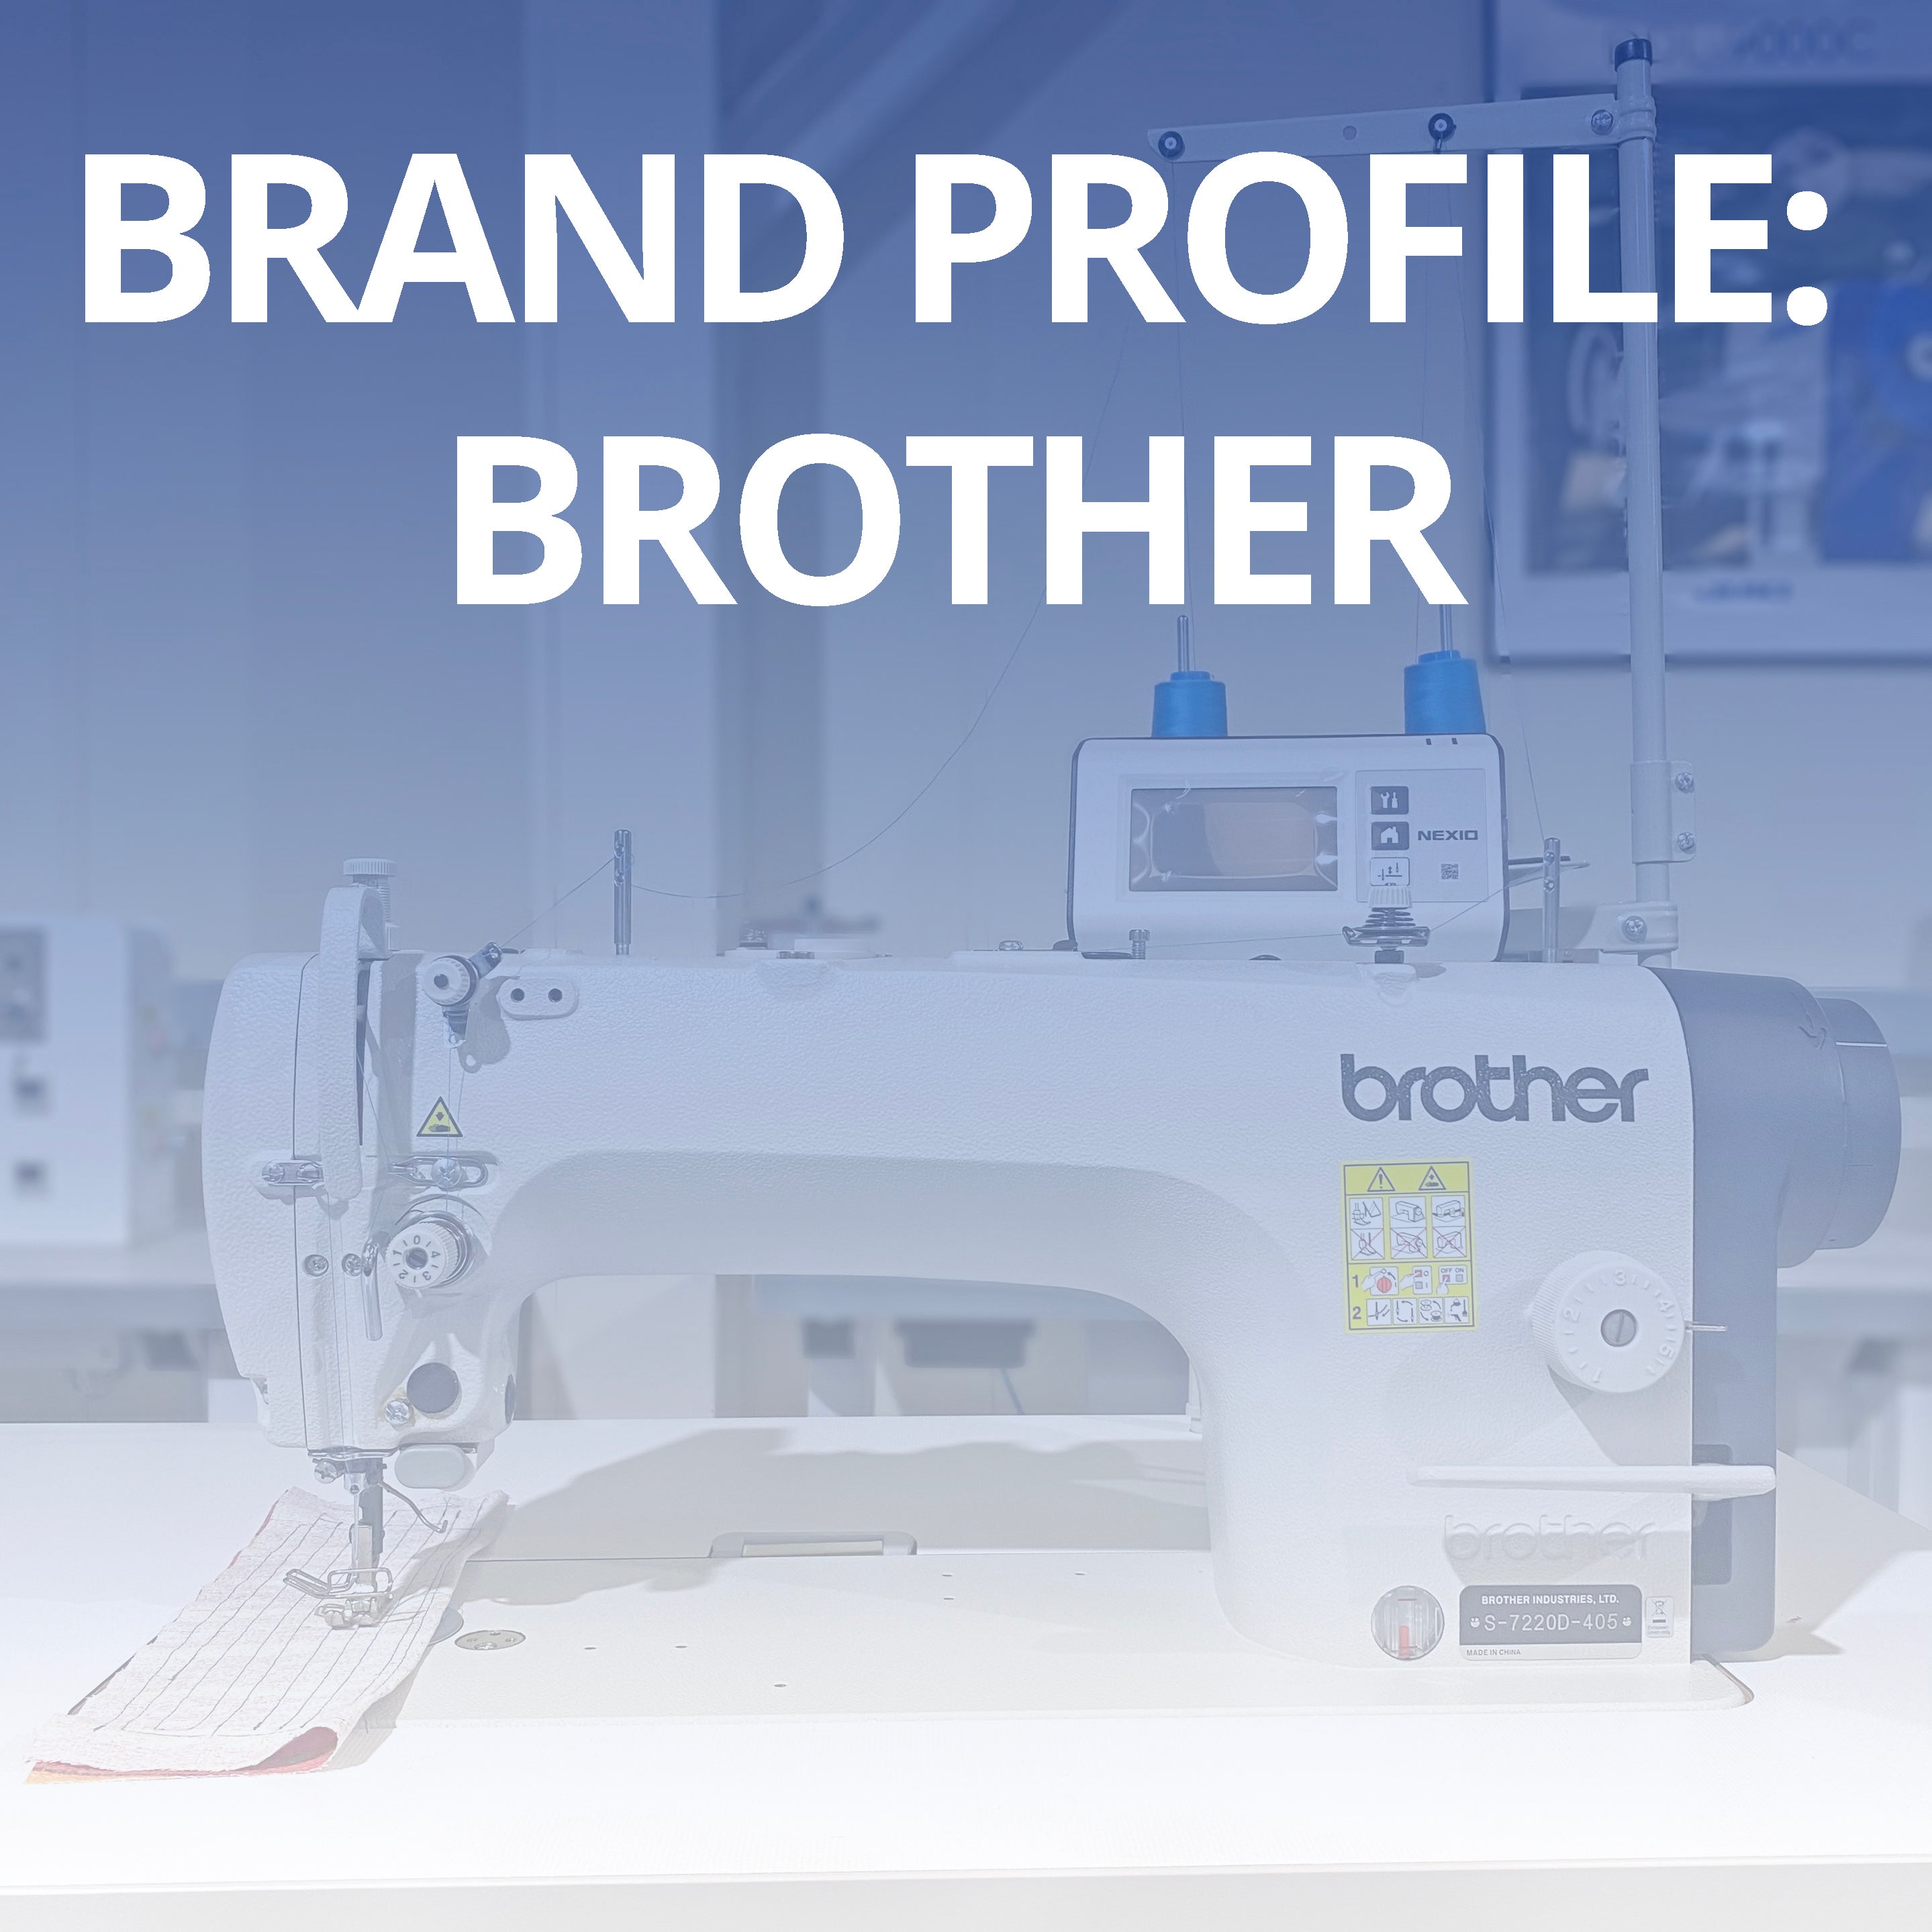 Brand Profile: Brother